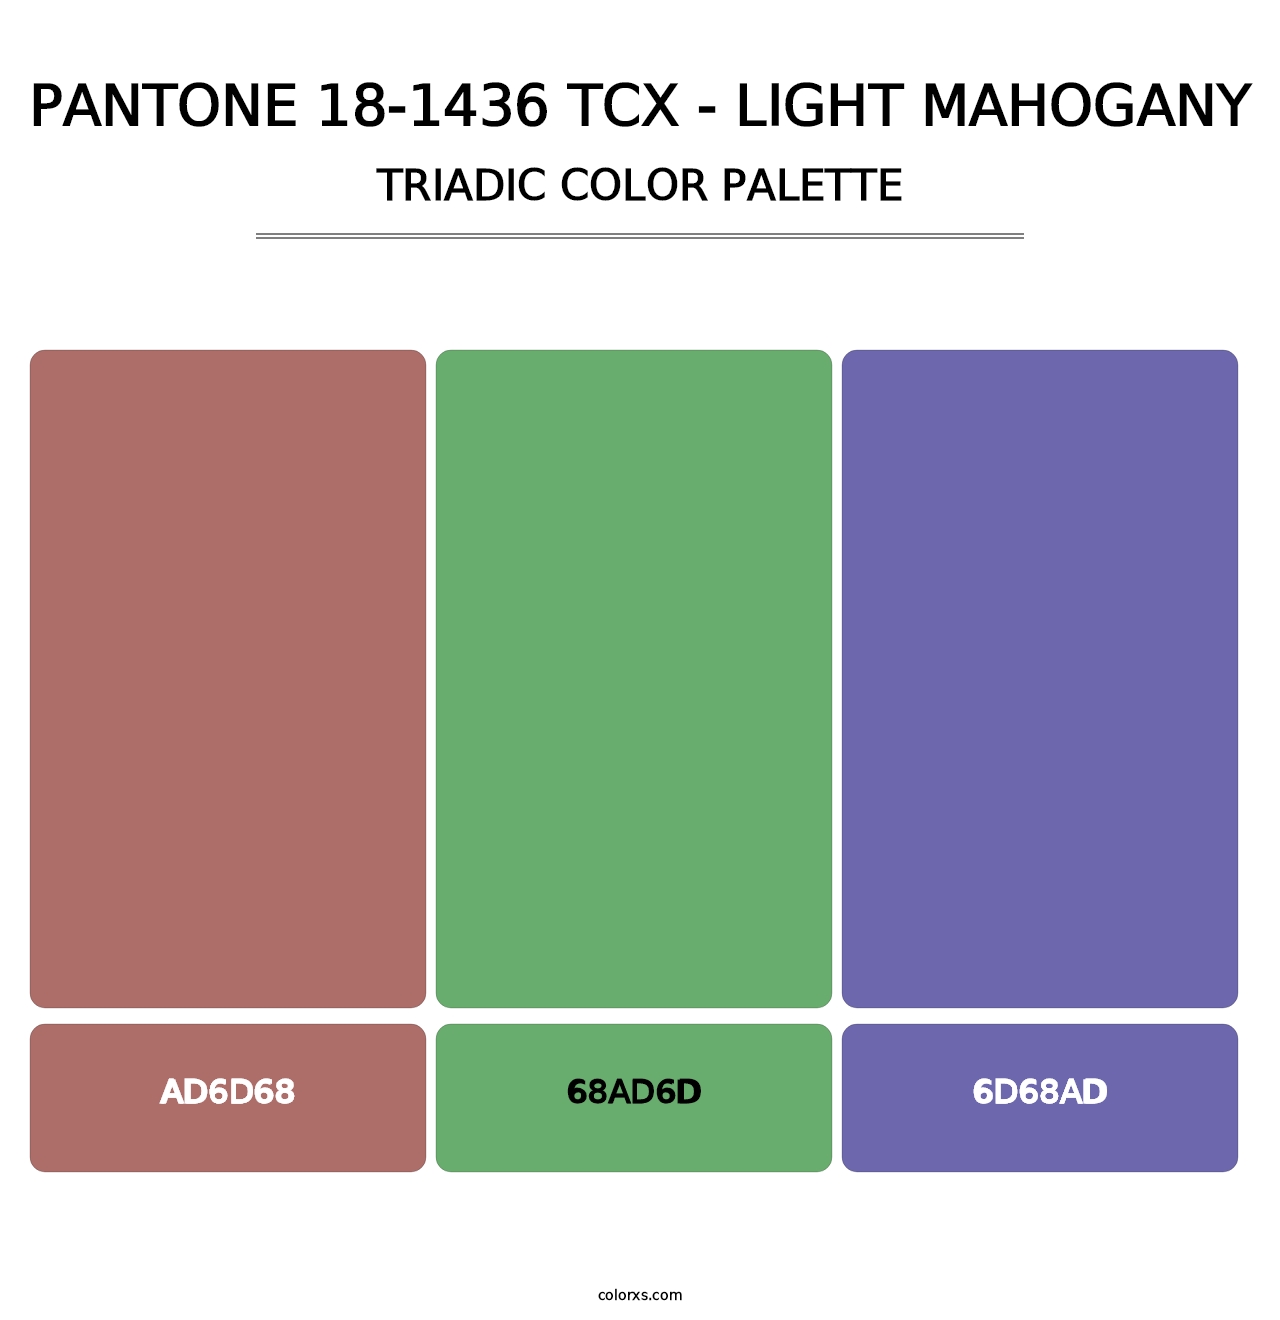 PANTONE 18-1436 TCX - Light Mahogany - Triadic Color Palette